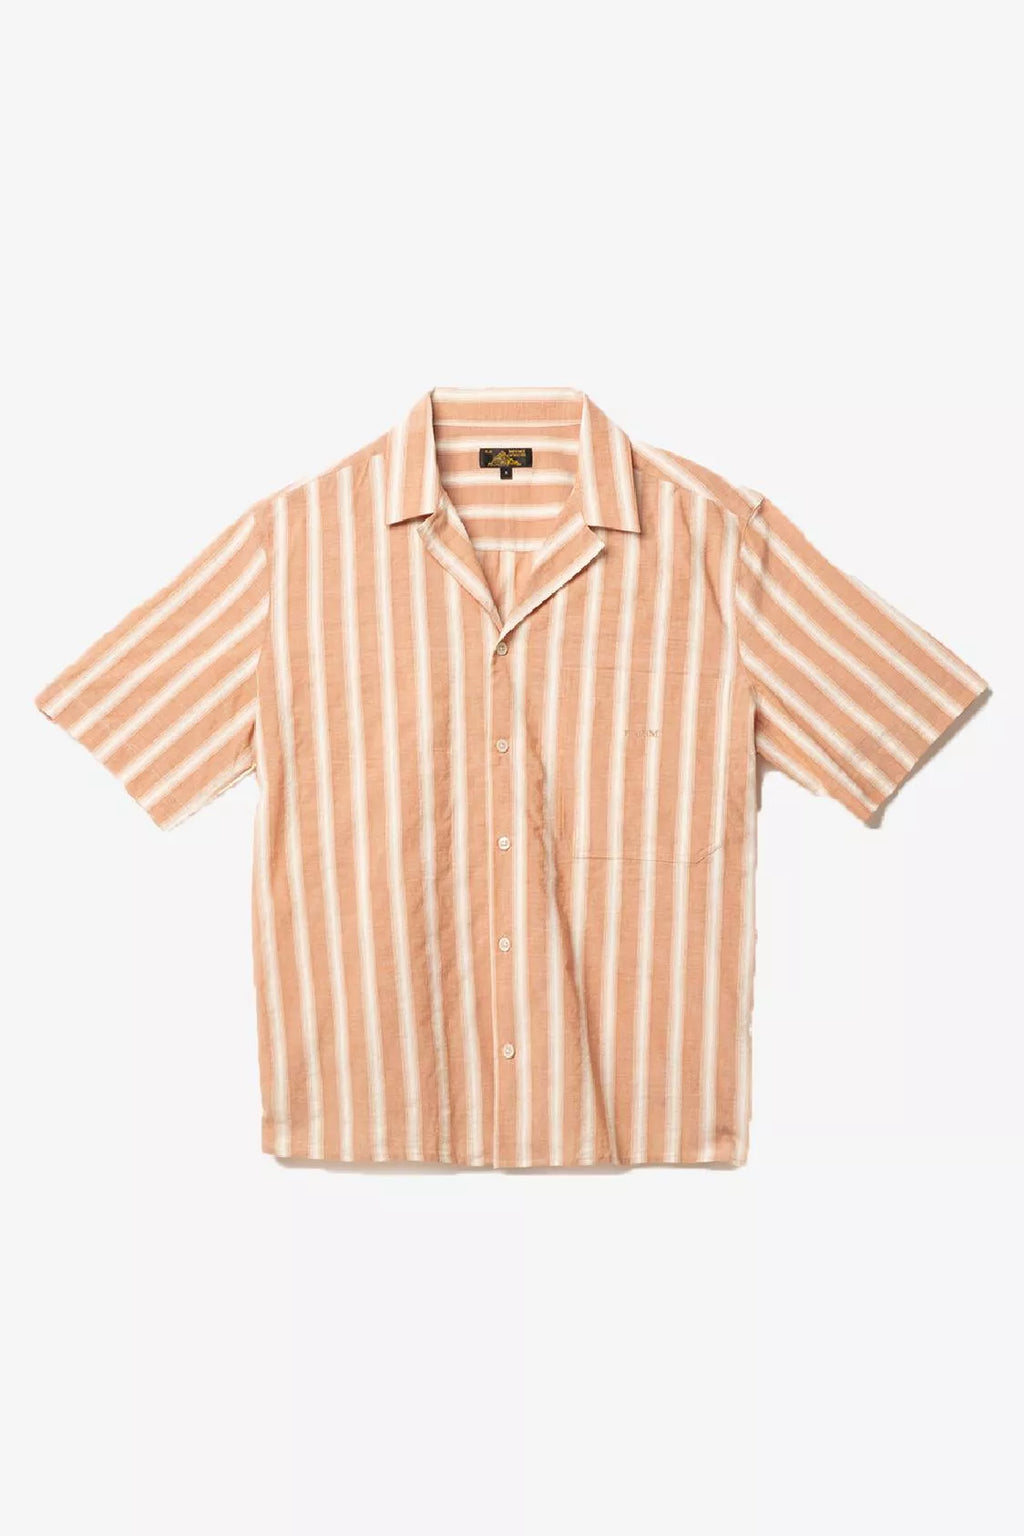 Campeche - Stripes Shirt - Sienne